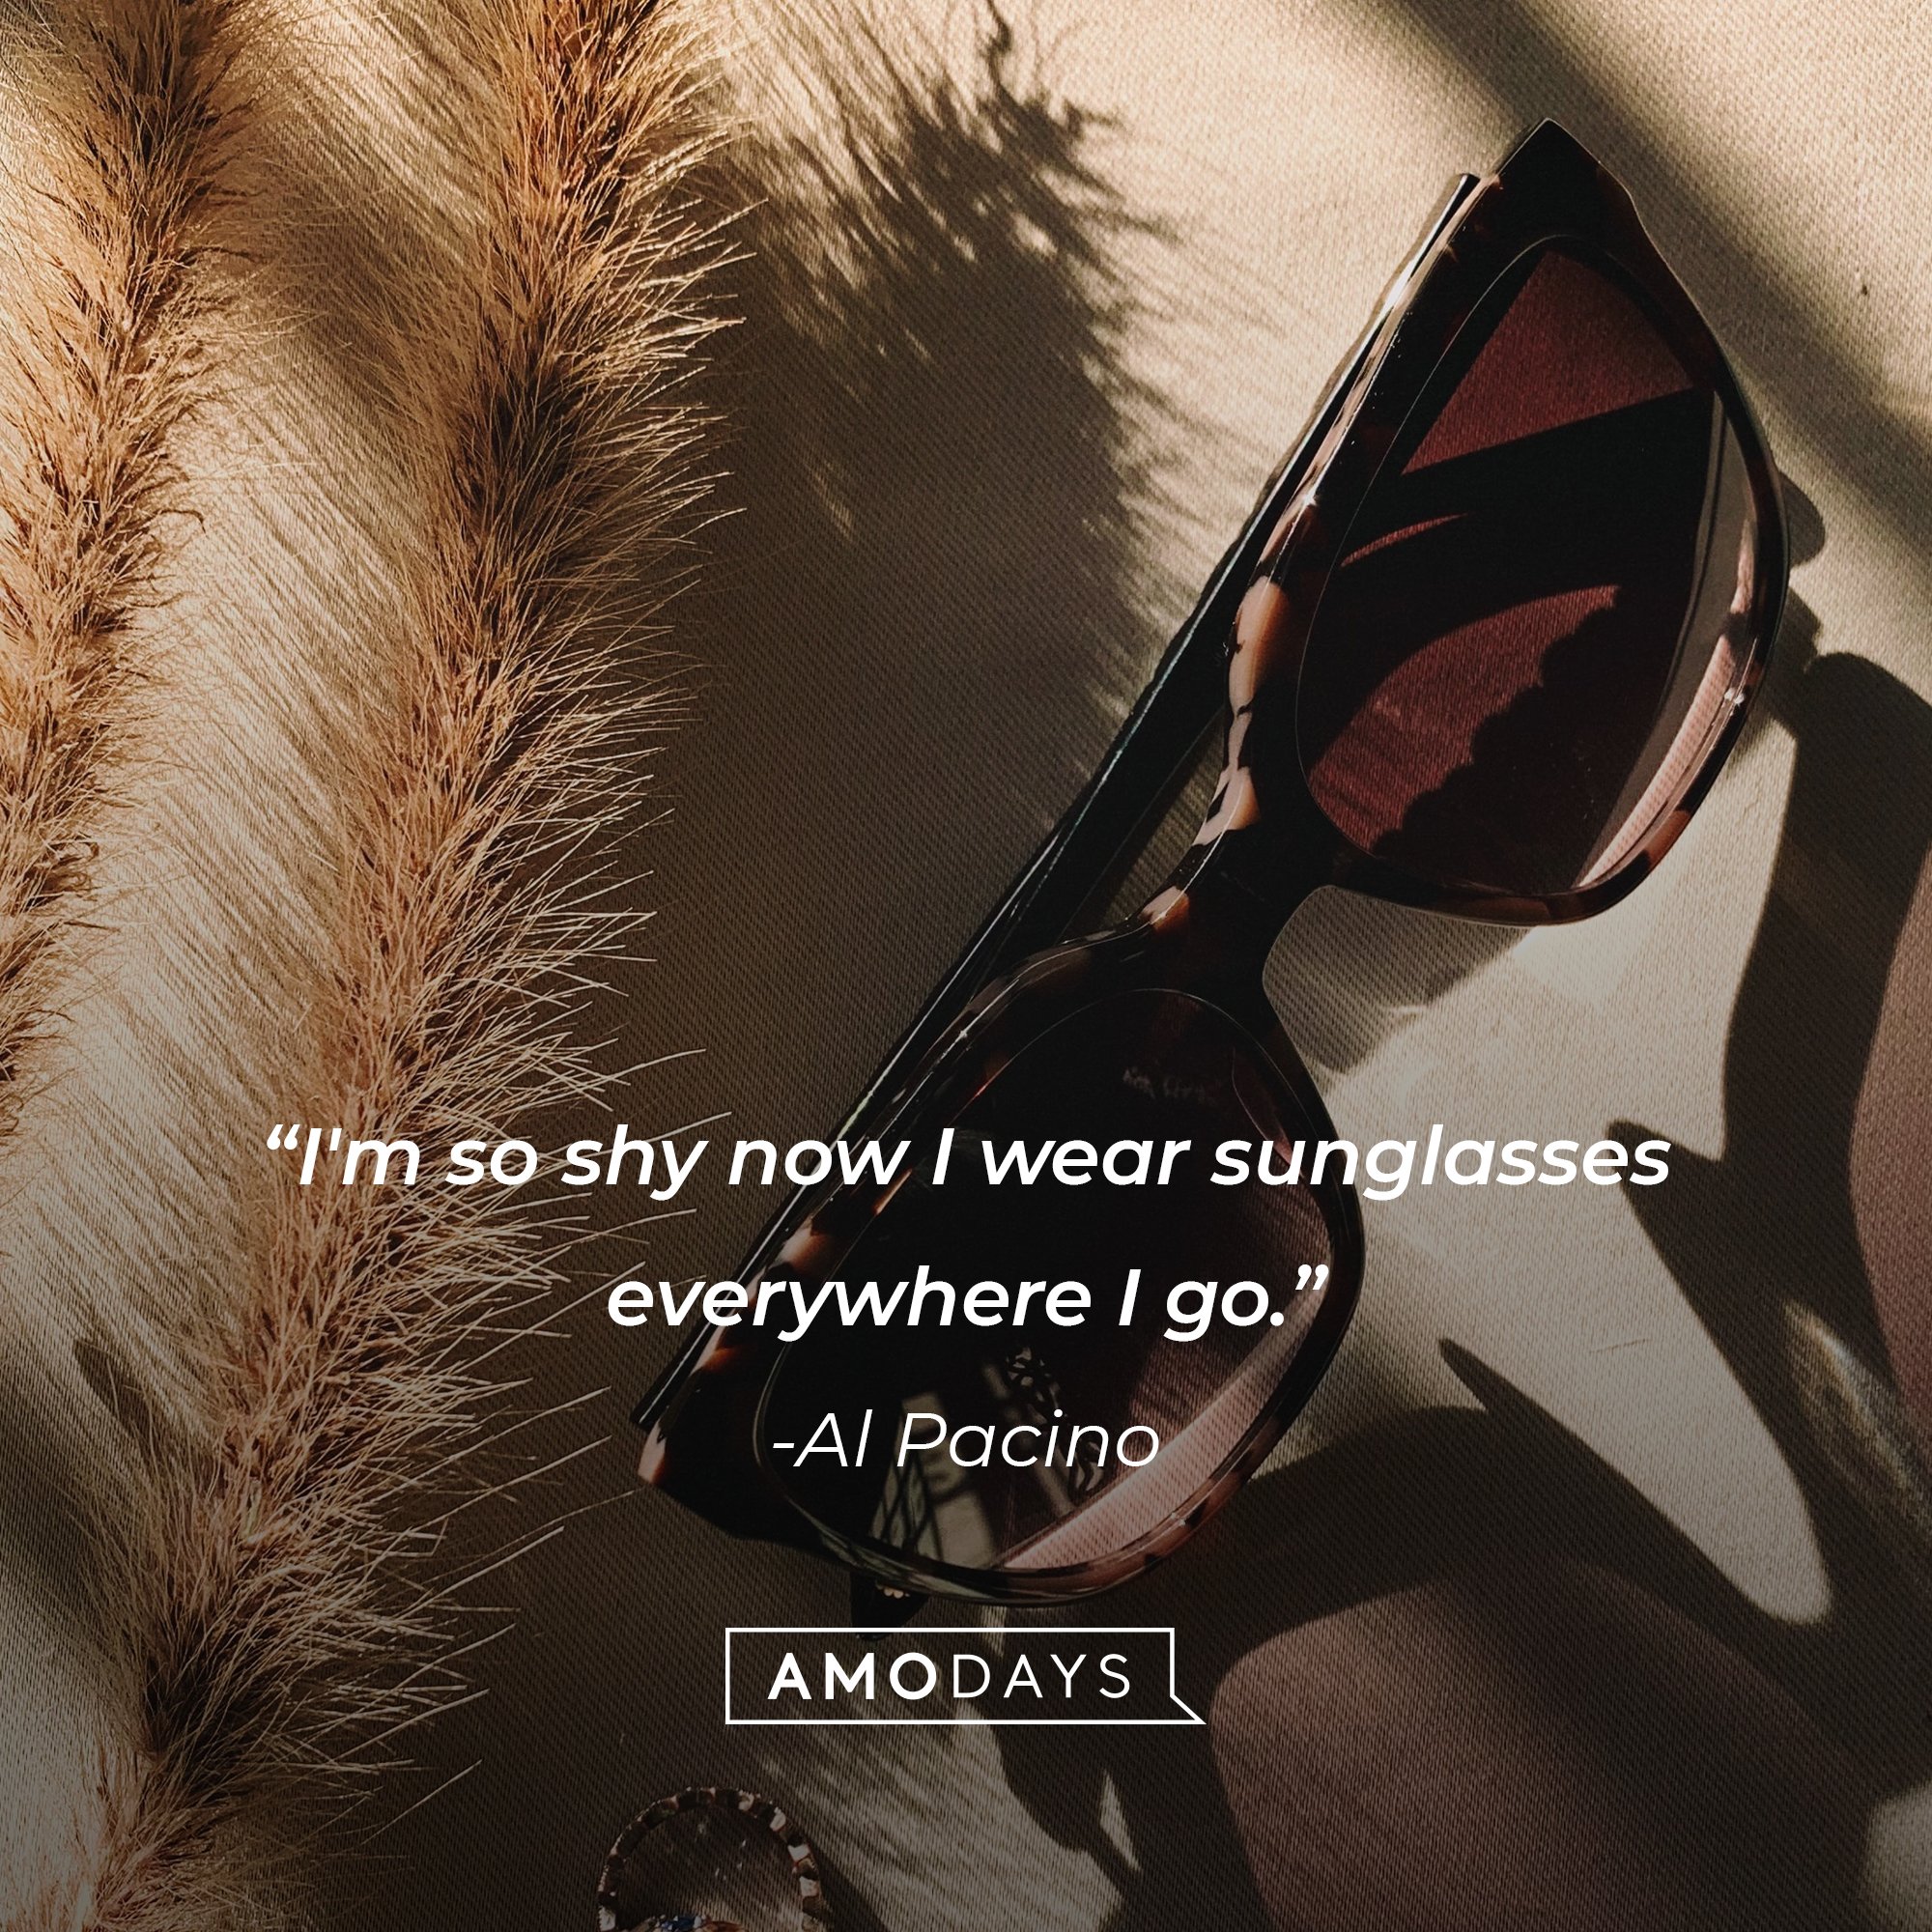 Al Pacino’s quote: "I'm so shy now I wear sunglasses everywhere I go." | Image: AmoDays 